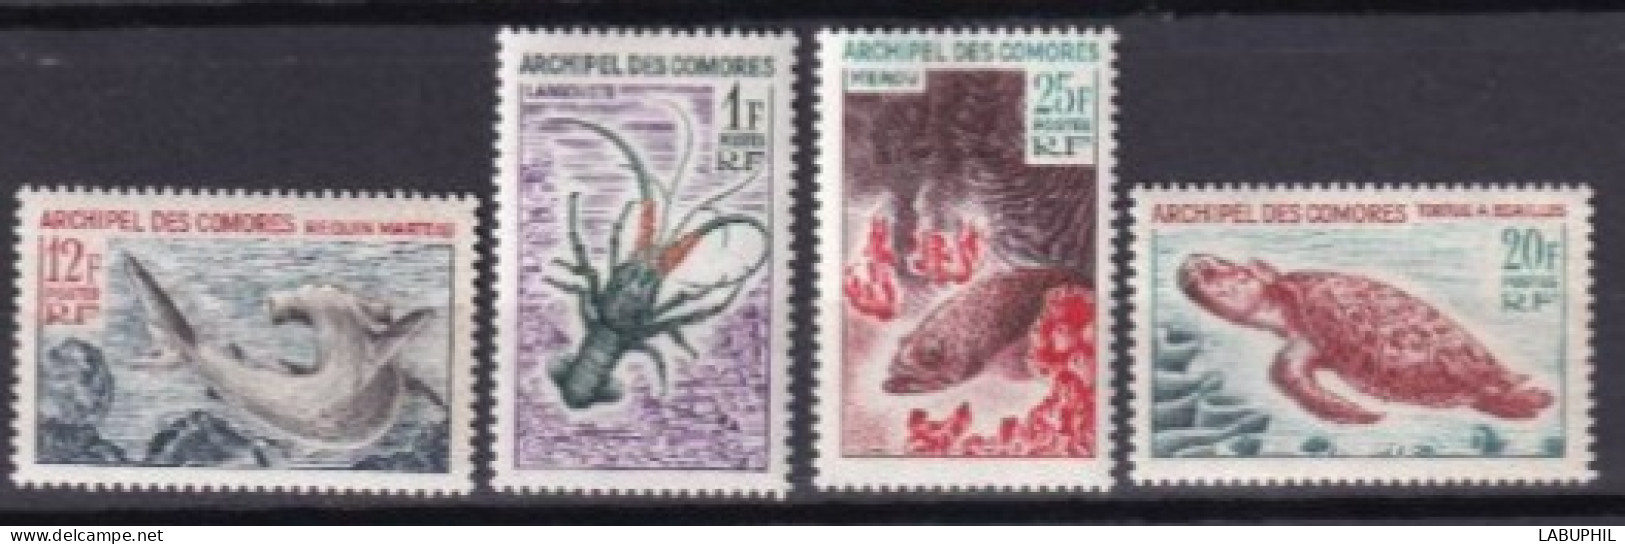 COMORES  NEUF MNH **1966 Faune Marine - Unused Stamps